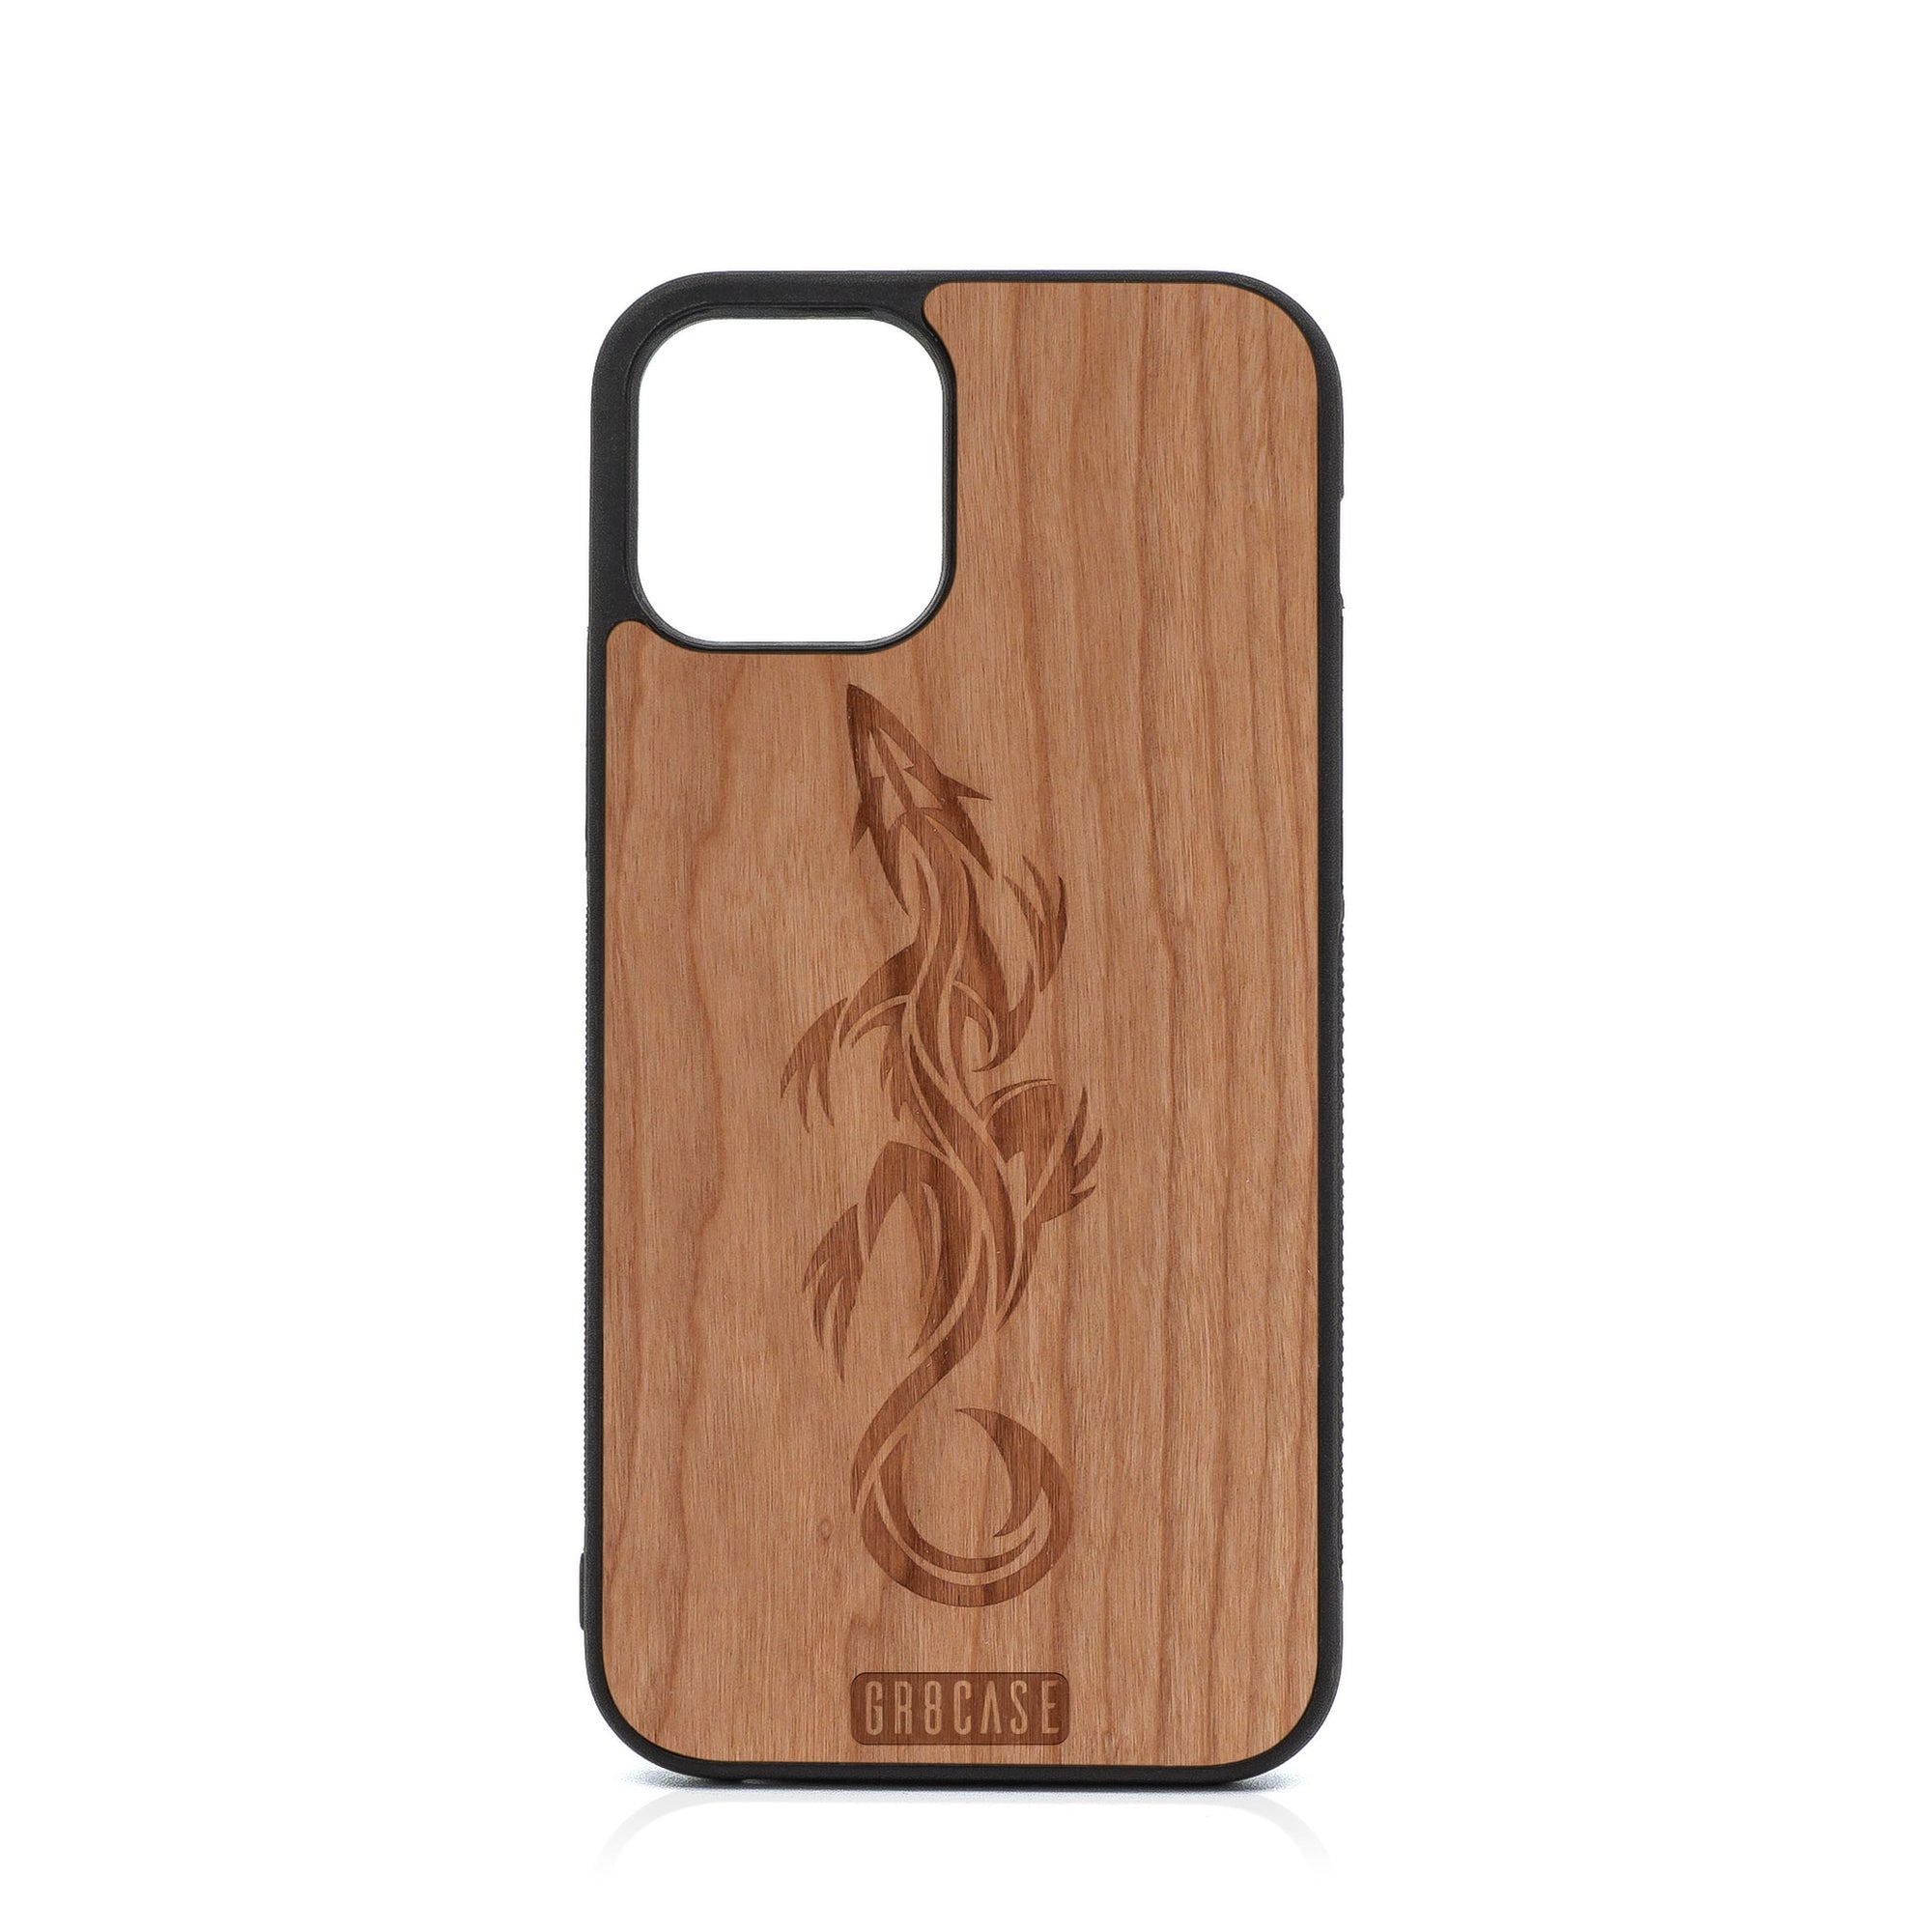 Lizard Design Wood Case For iPhone 12